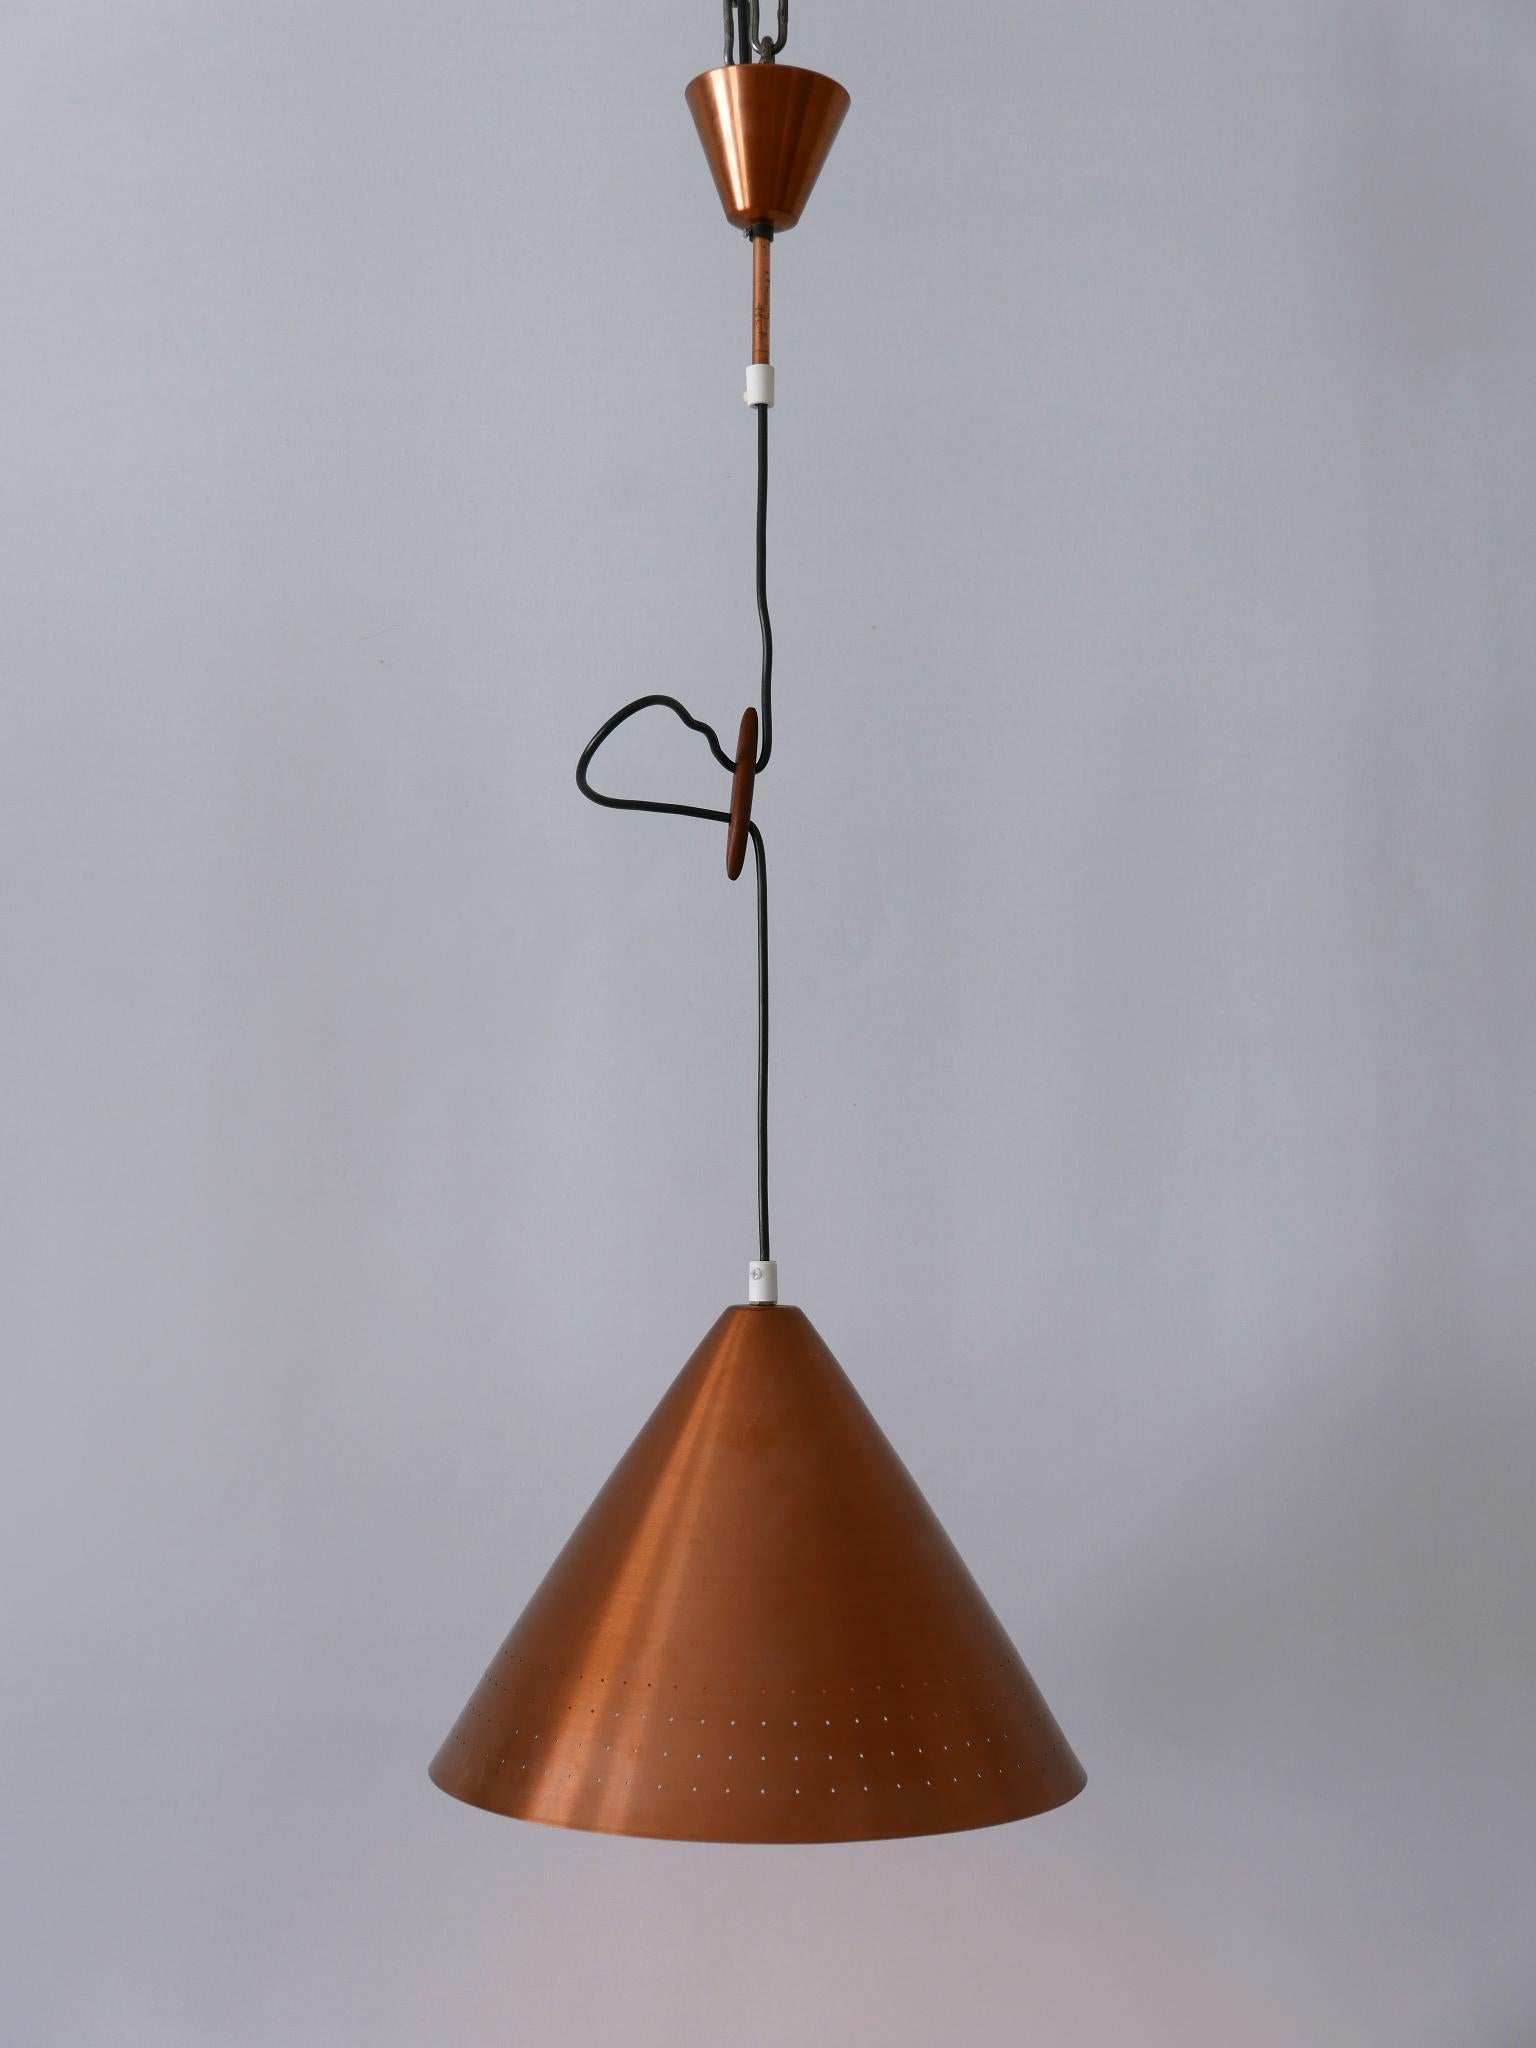 Mid-20th Century Rare Mid-Century Modern Scandinavian Copper Pendant Lamp or Hanging Light  1960s For Sale